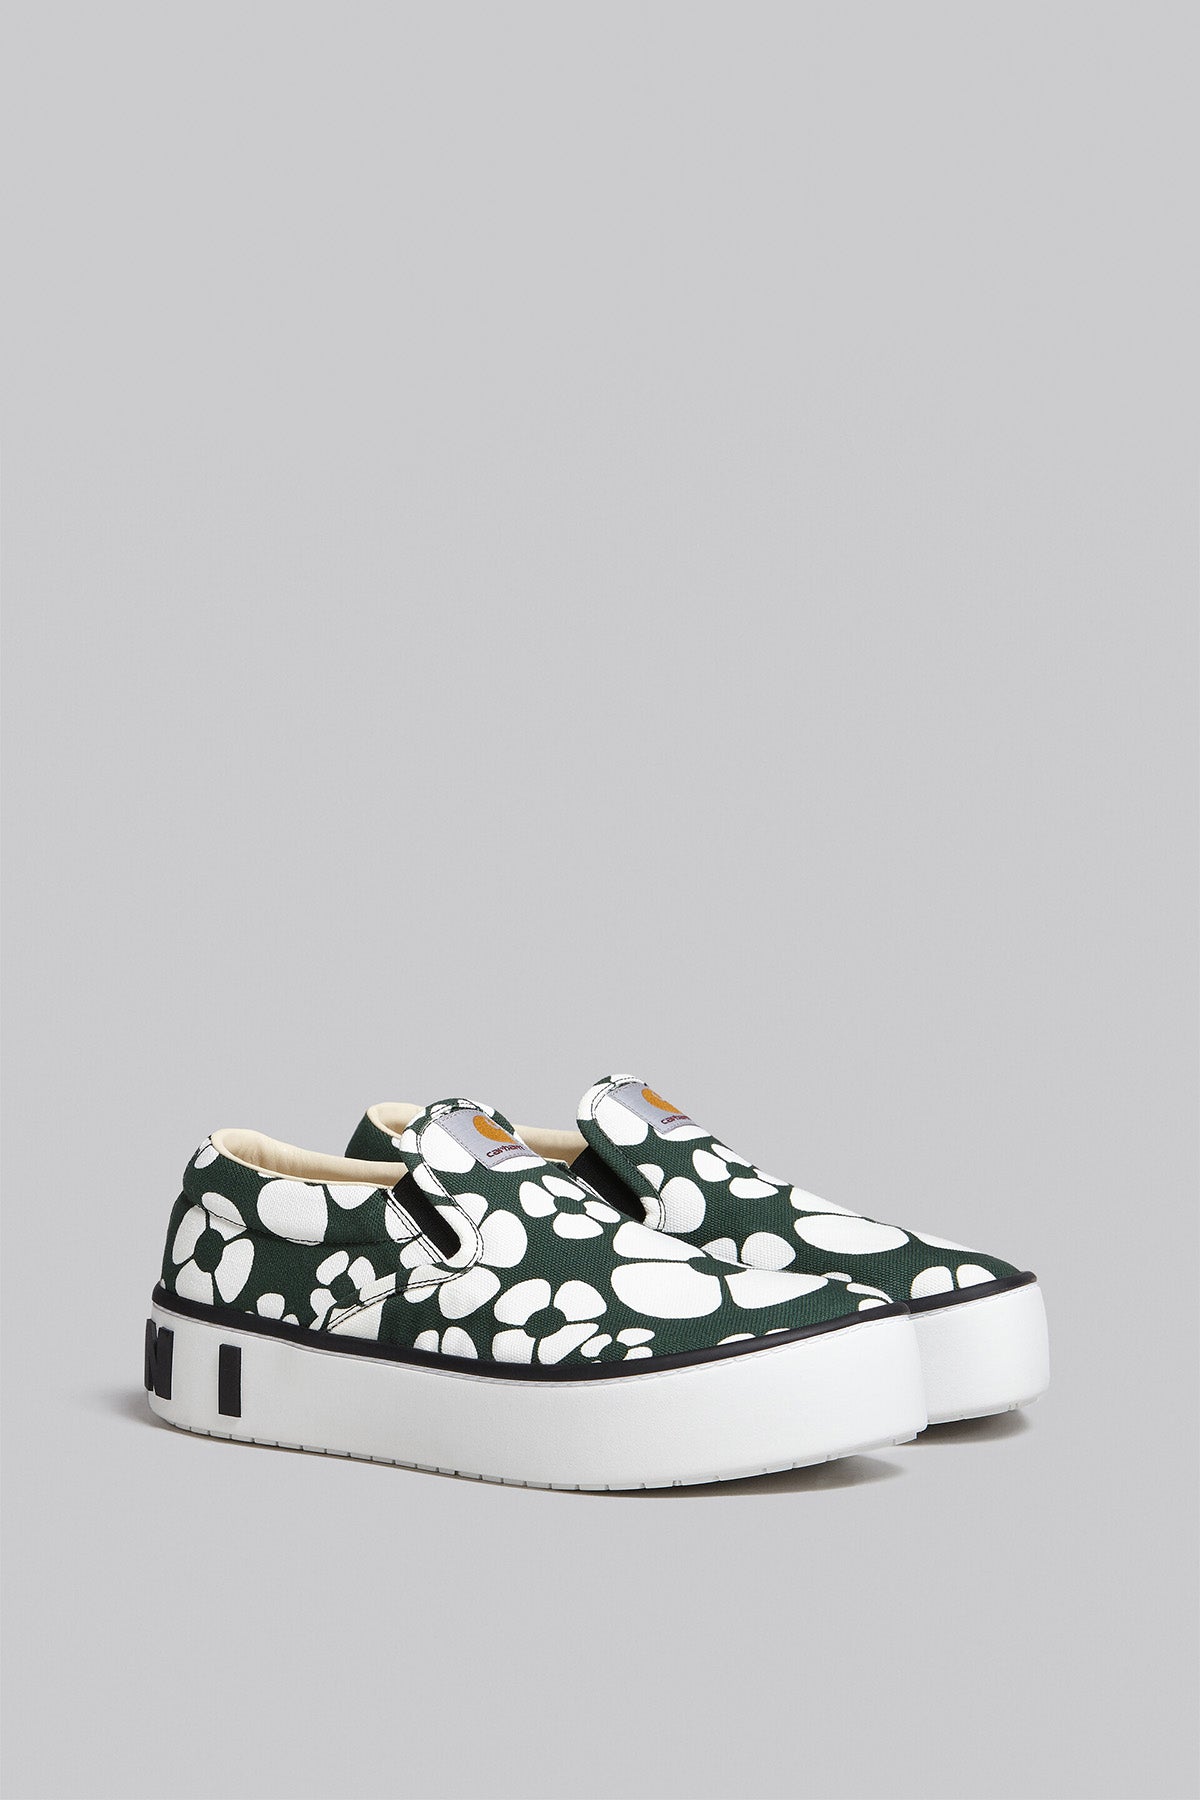 Marni floral-print sneakers - Green